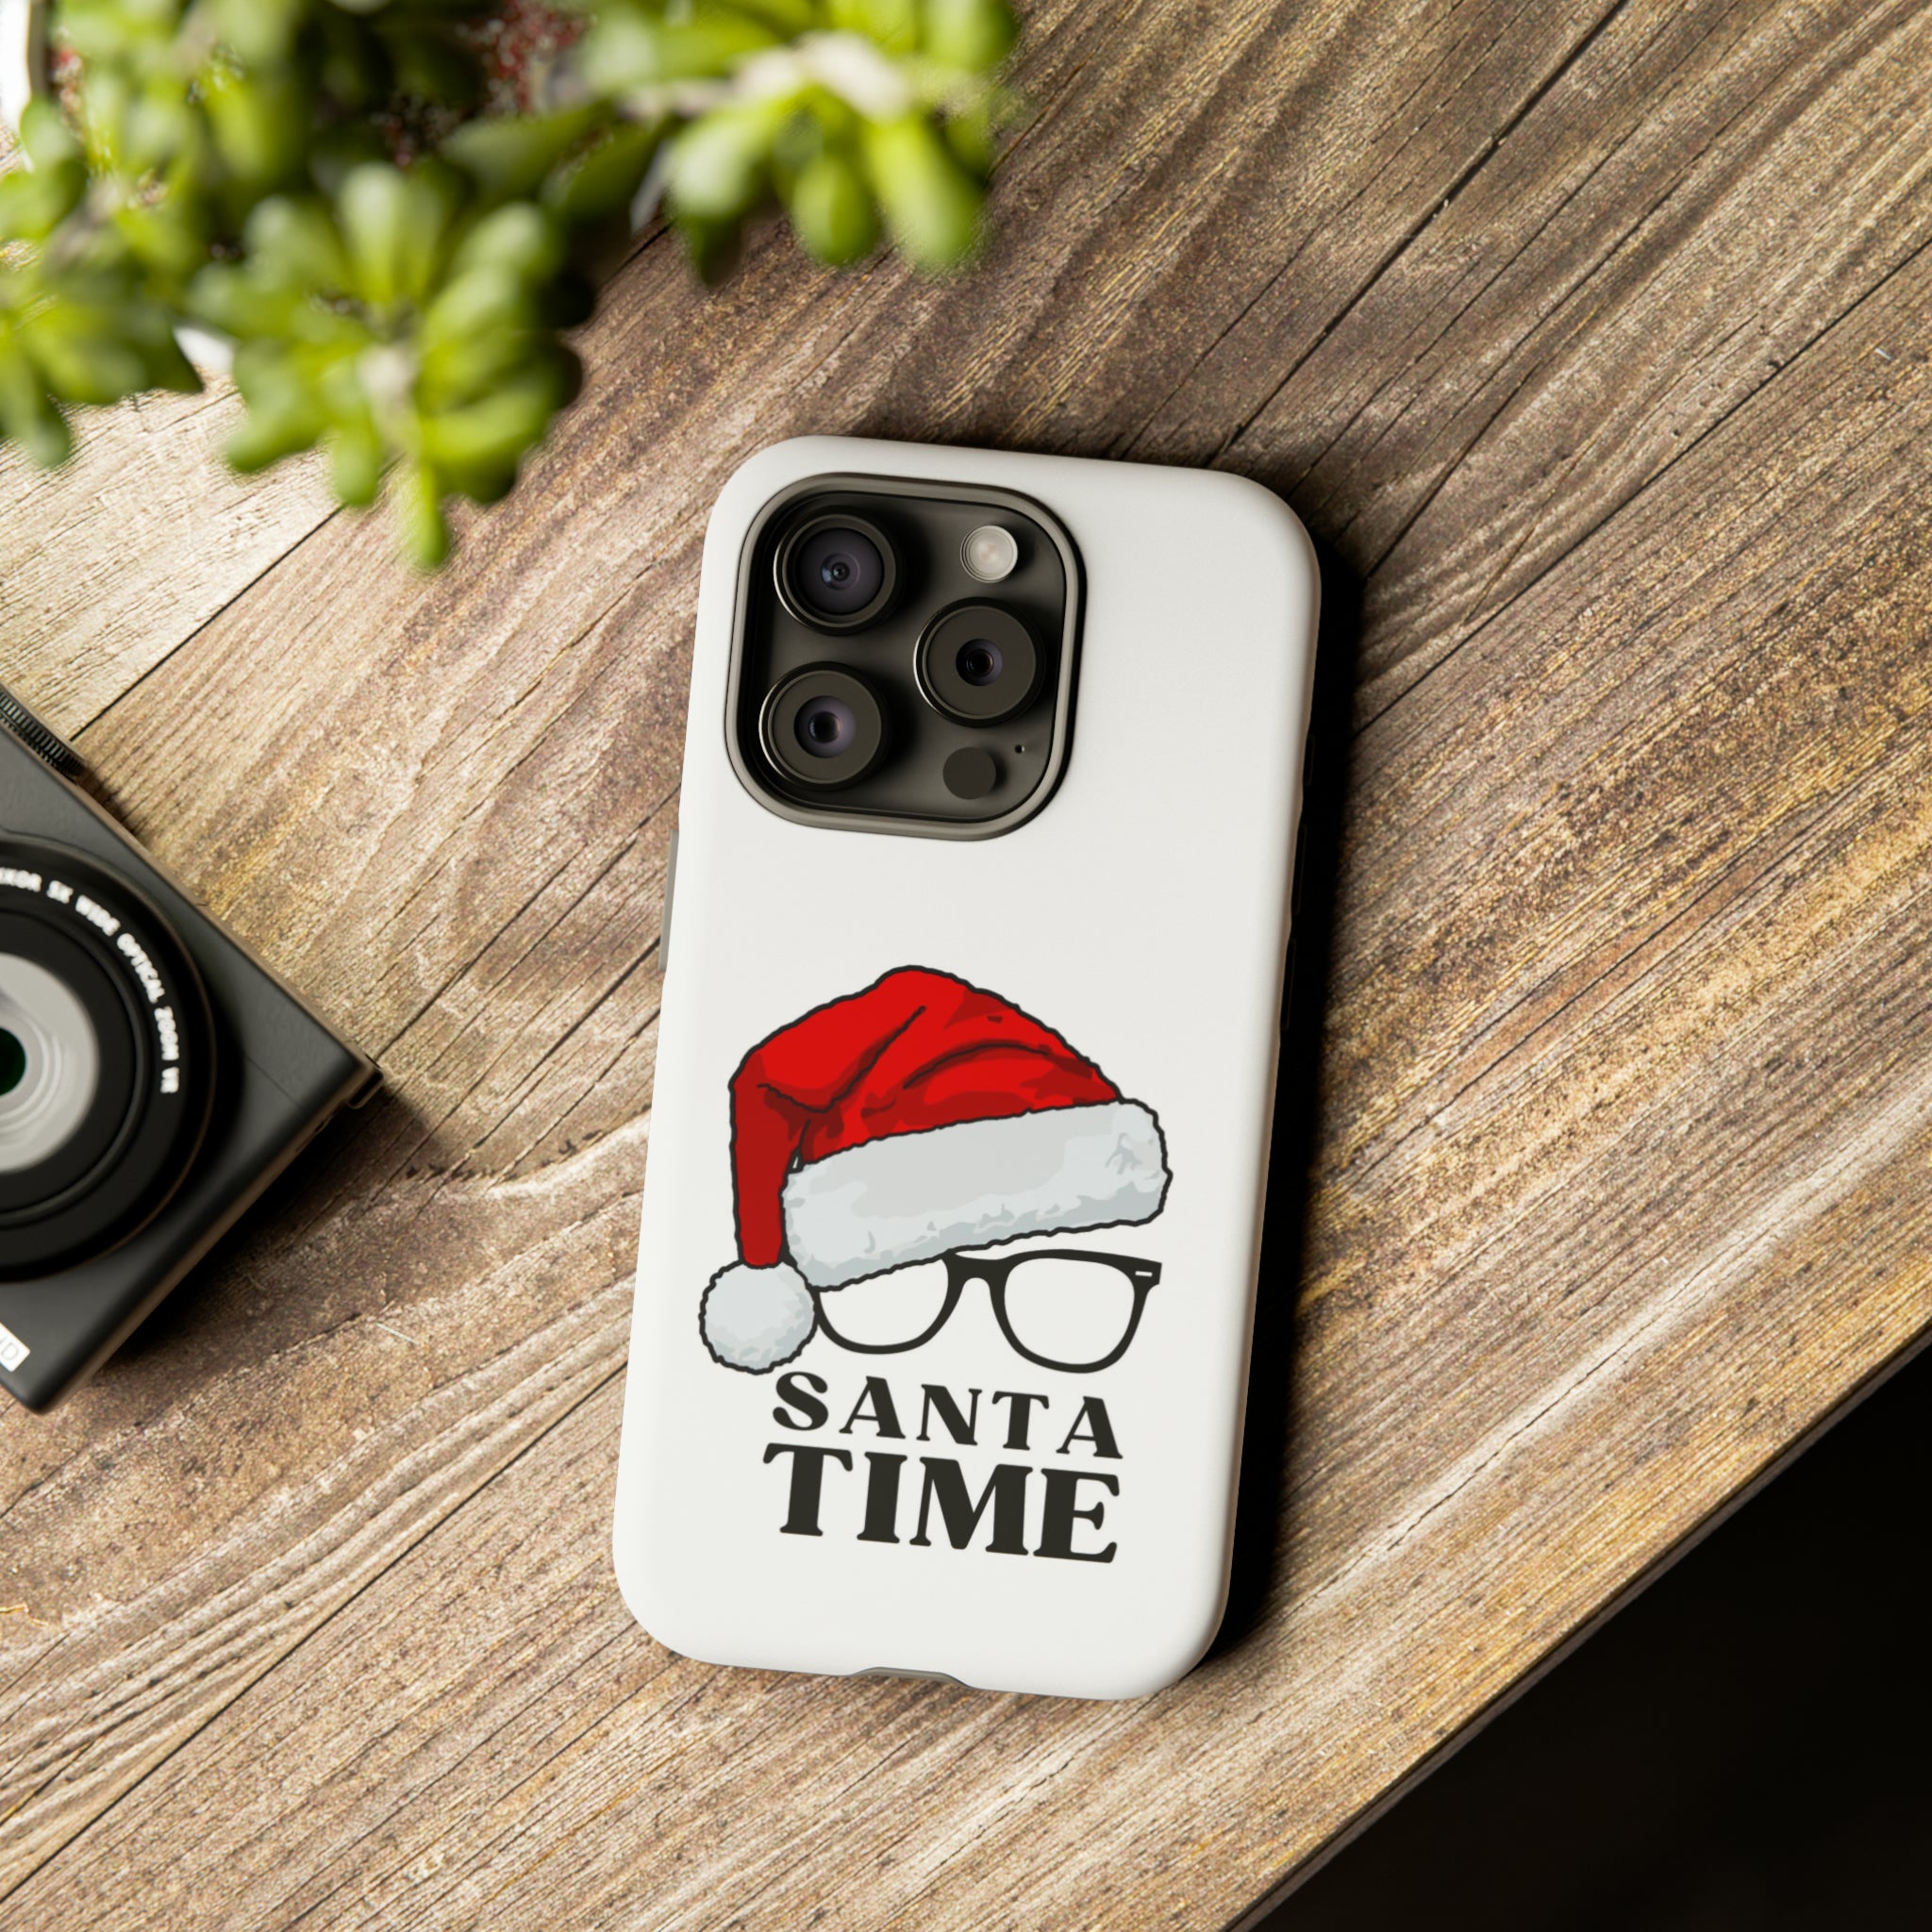 Santa Time Tough Phone Cases